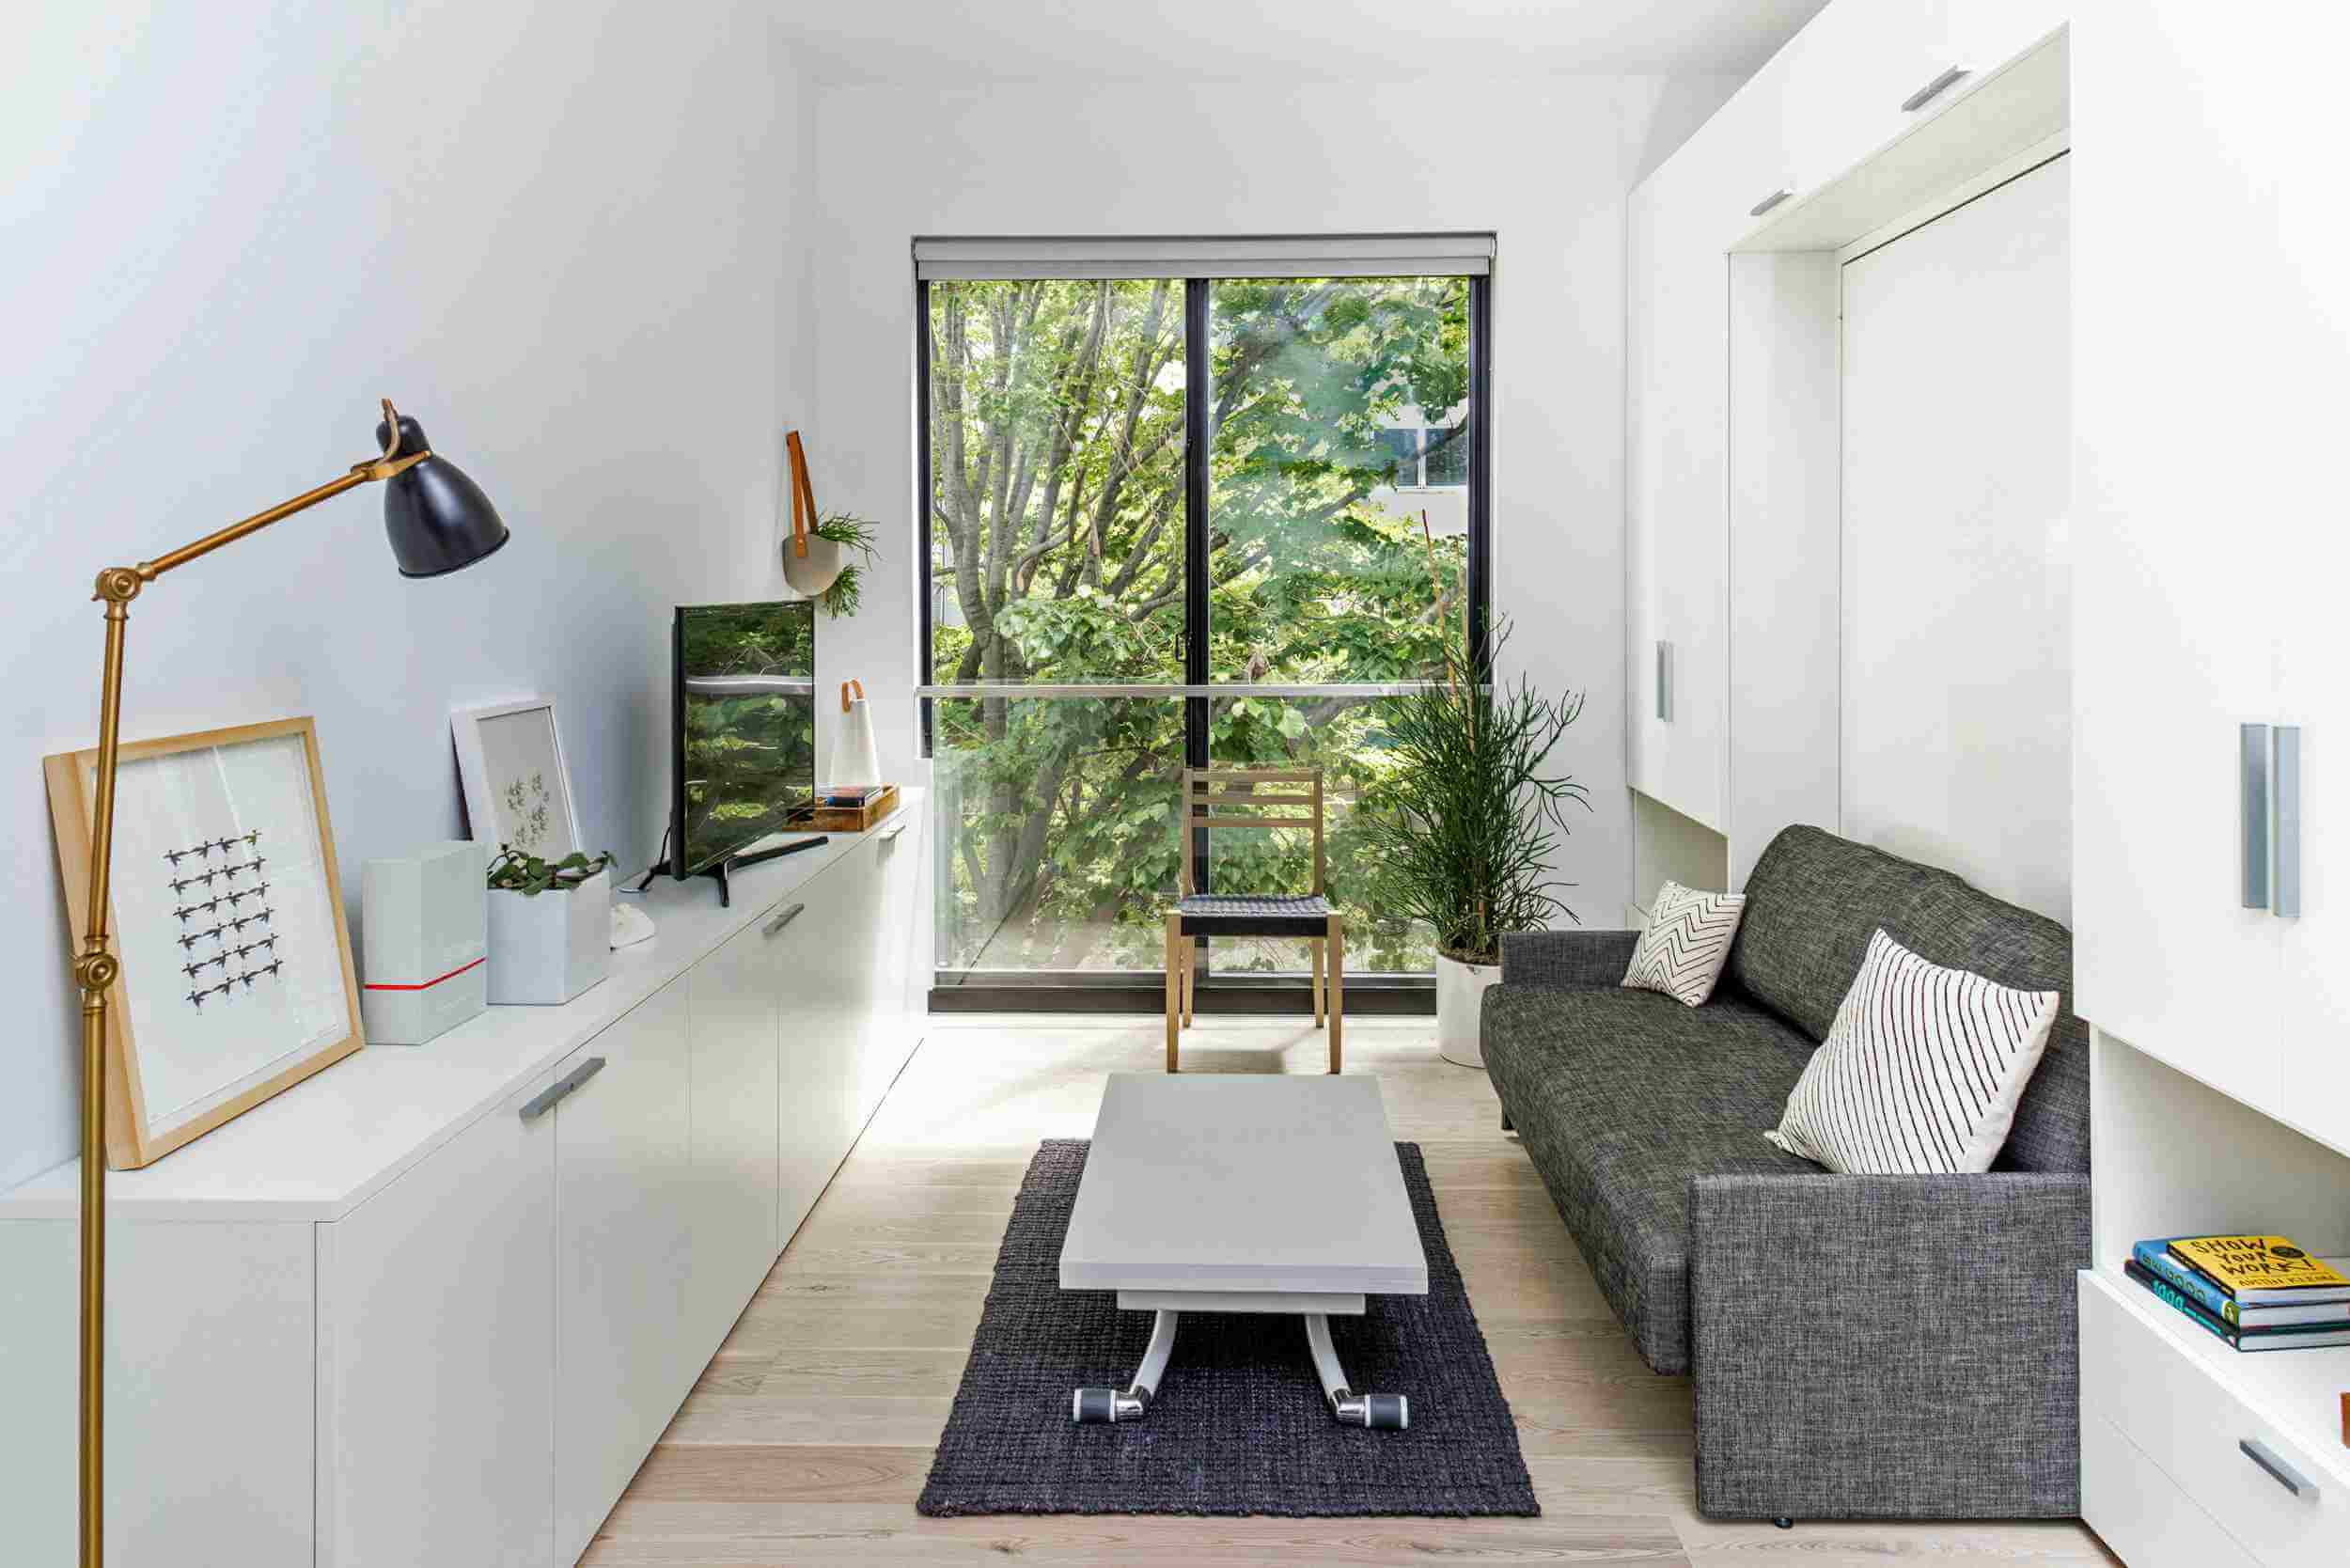 Studio Interior Design Ideas : The Artistic Approach To Live In A Small ...